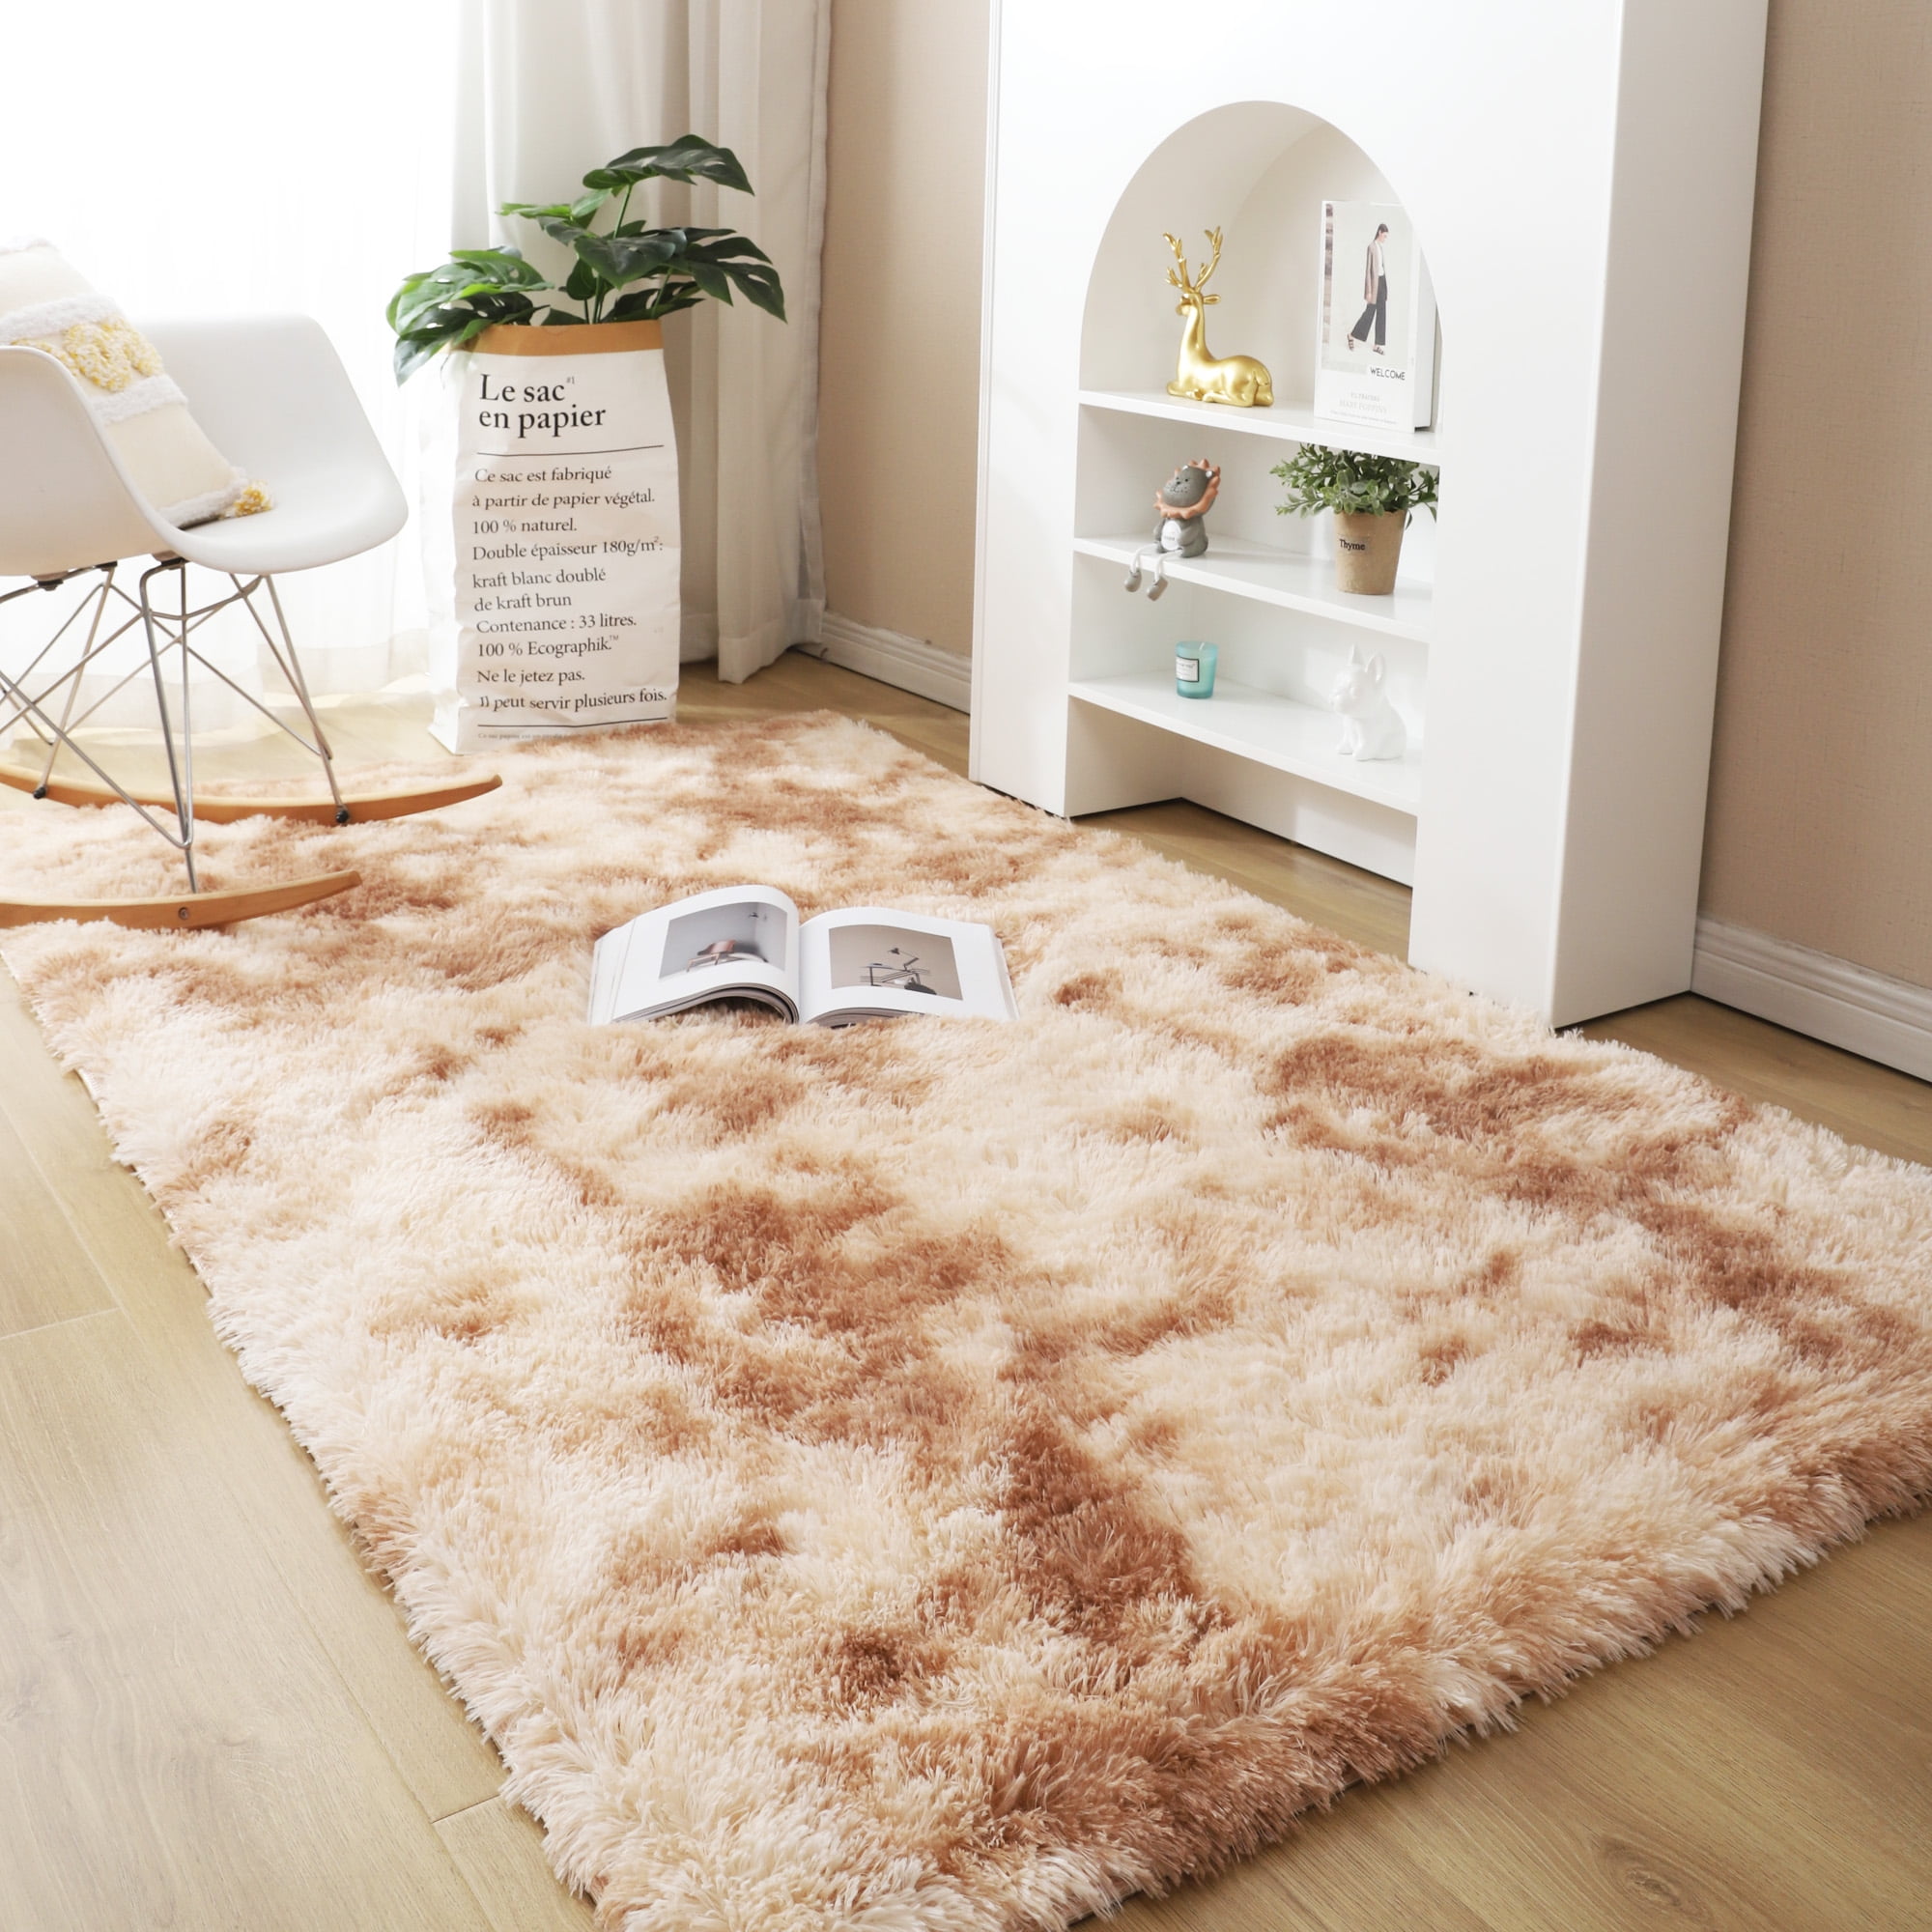 Raccoon Washing Clothes Room Floor Carpet Non-skid Door Bath Mat Home Decor Rugs 